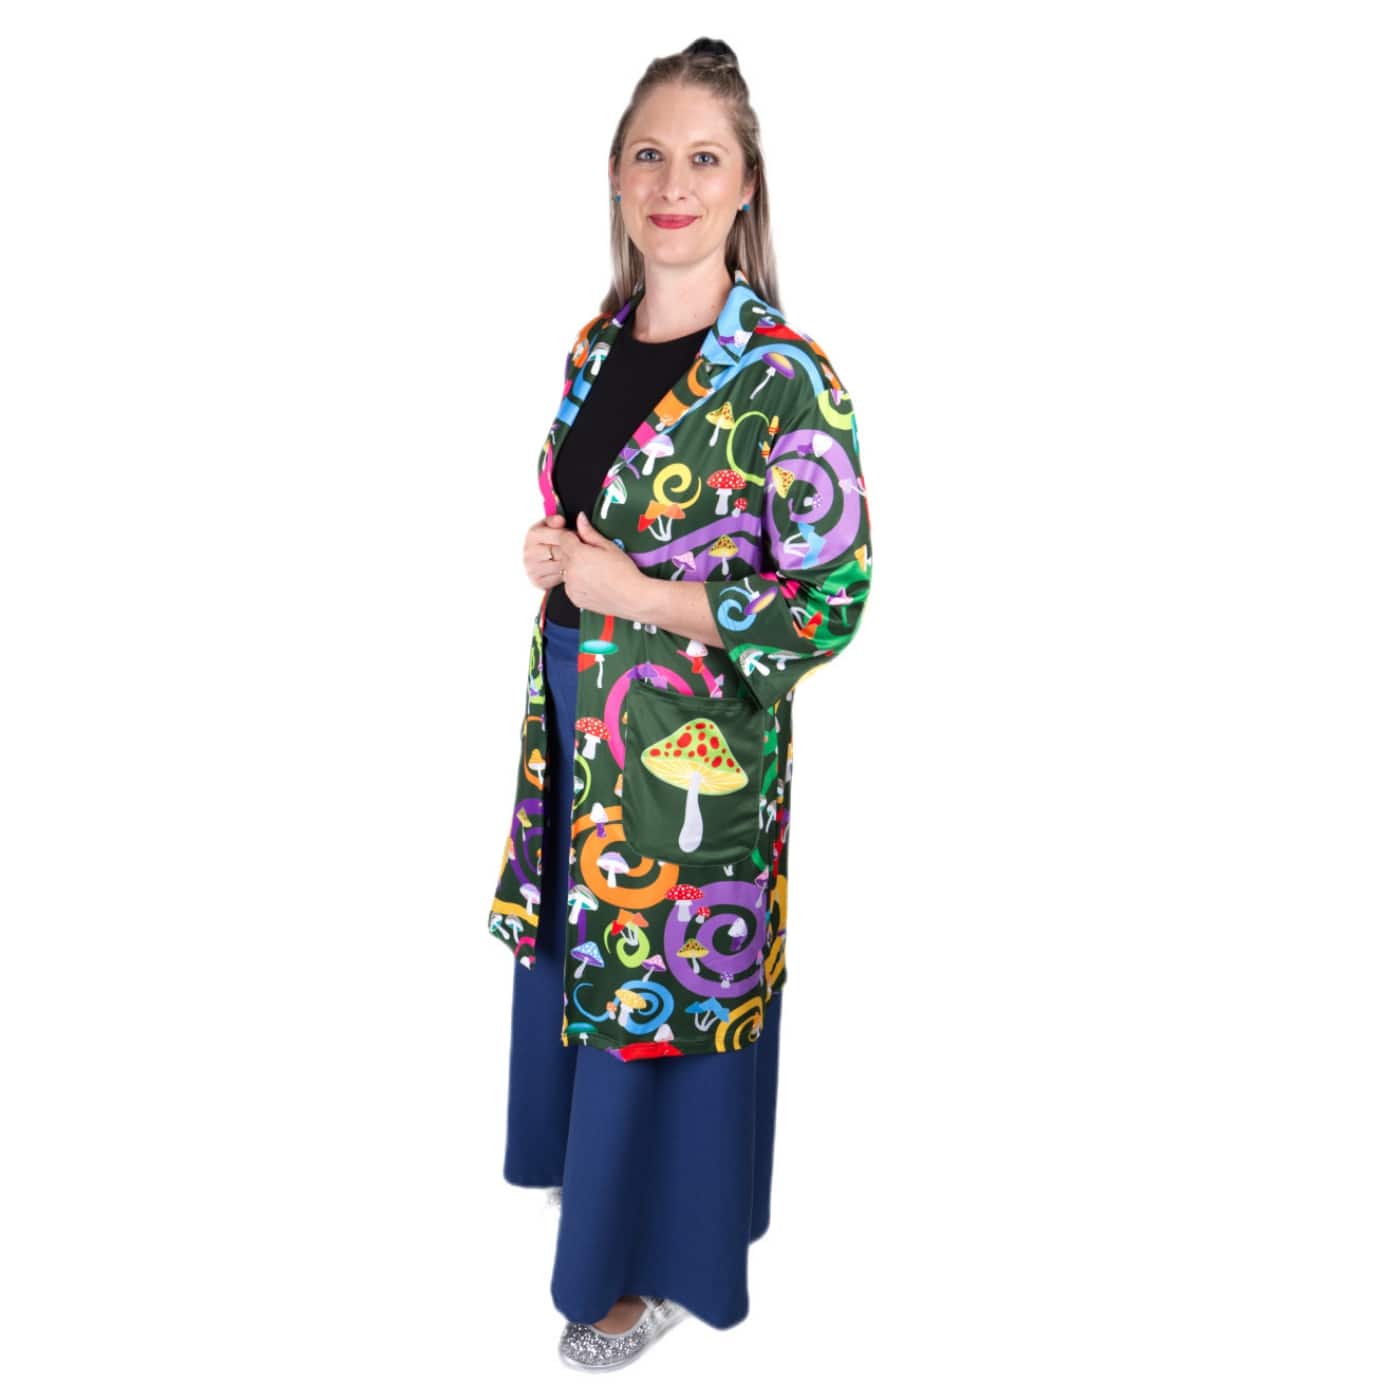 Toadstool Safari Jacket by RainbowsAndFairies.com.au (Mushroom - Psychedelic Swirls - Woodstock - Kimono - Vintage Inspired - Kitsch - Casual Jacket) - SKU: CL_SFJKT_TOADS_ORG - Pic-02